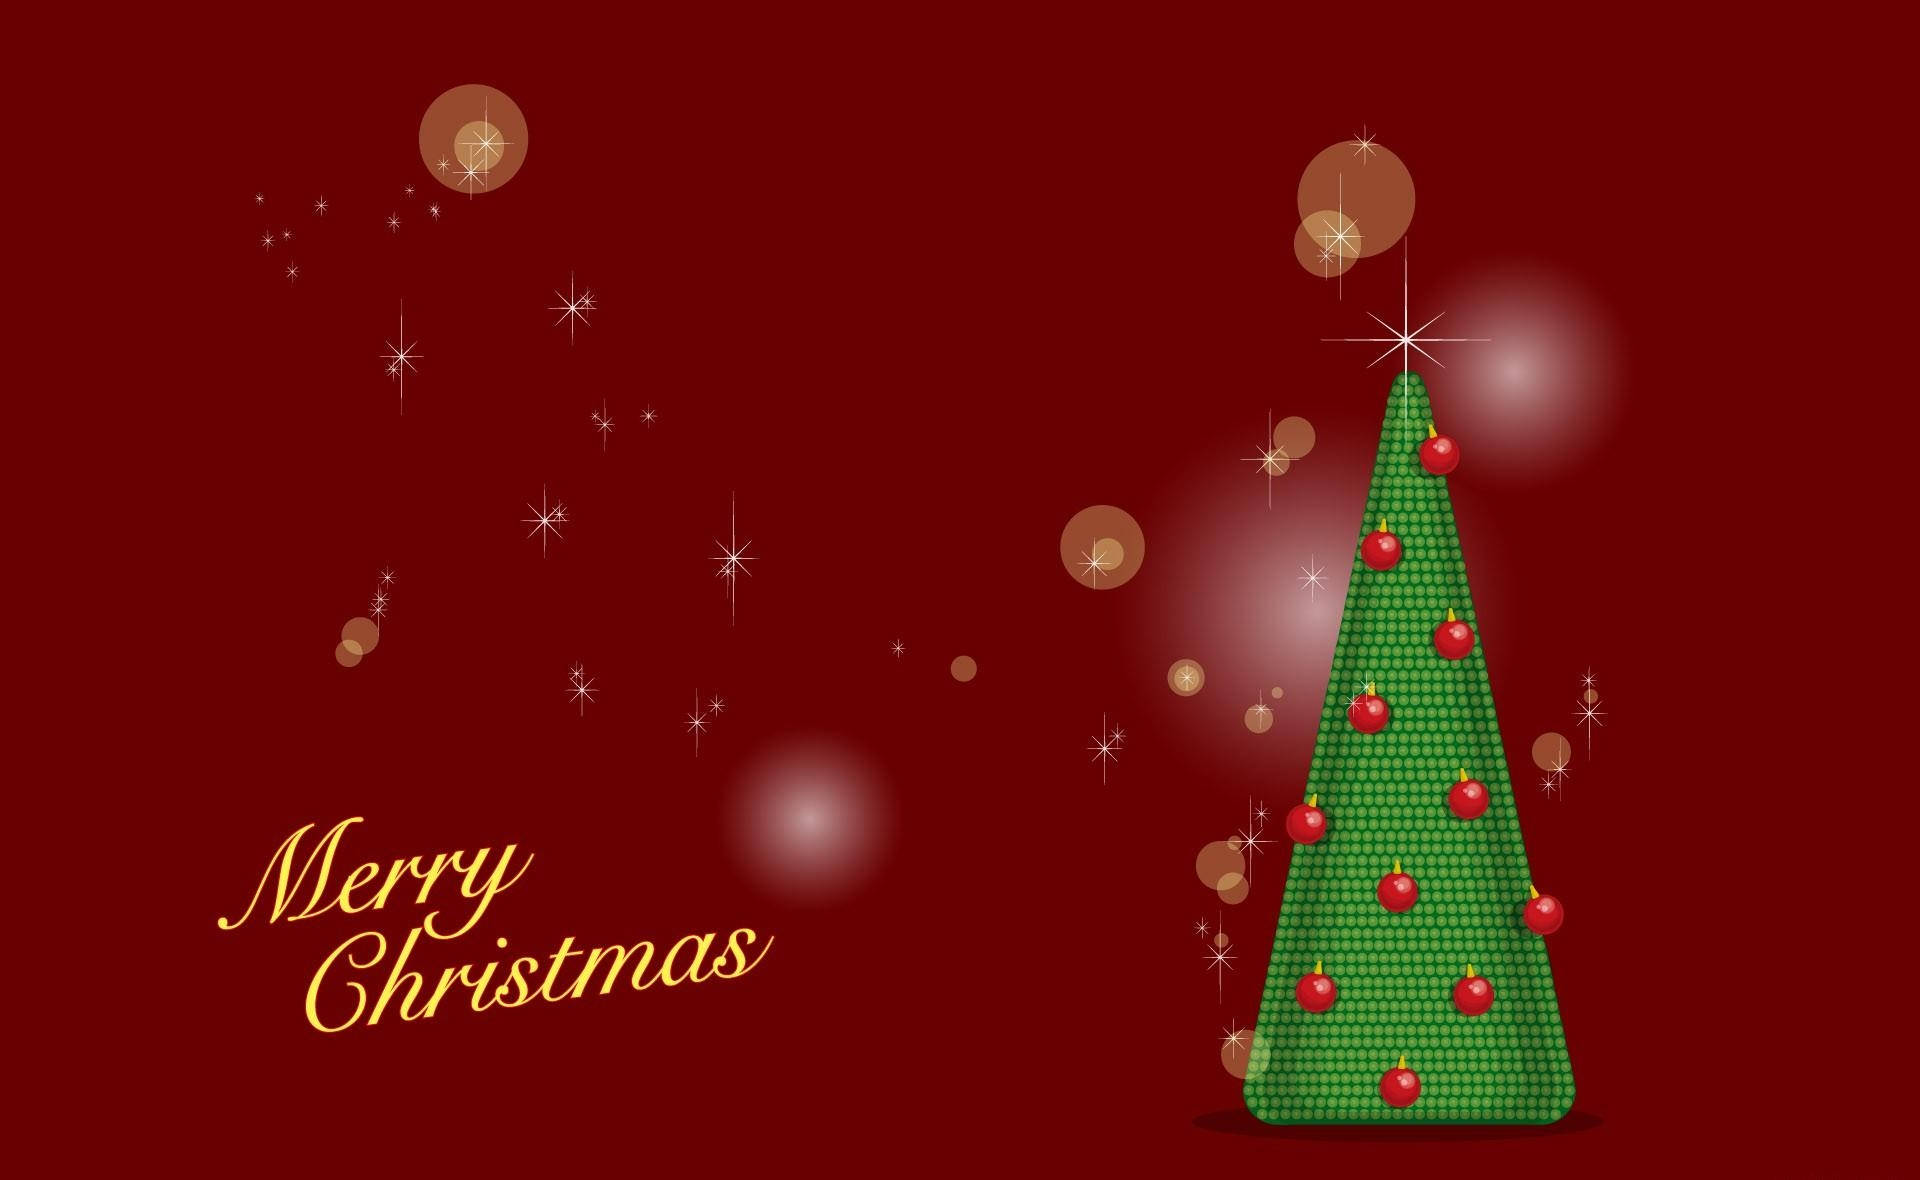 Red Merry Christmas Tree Digital Art Background